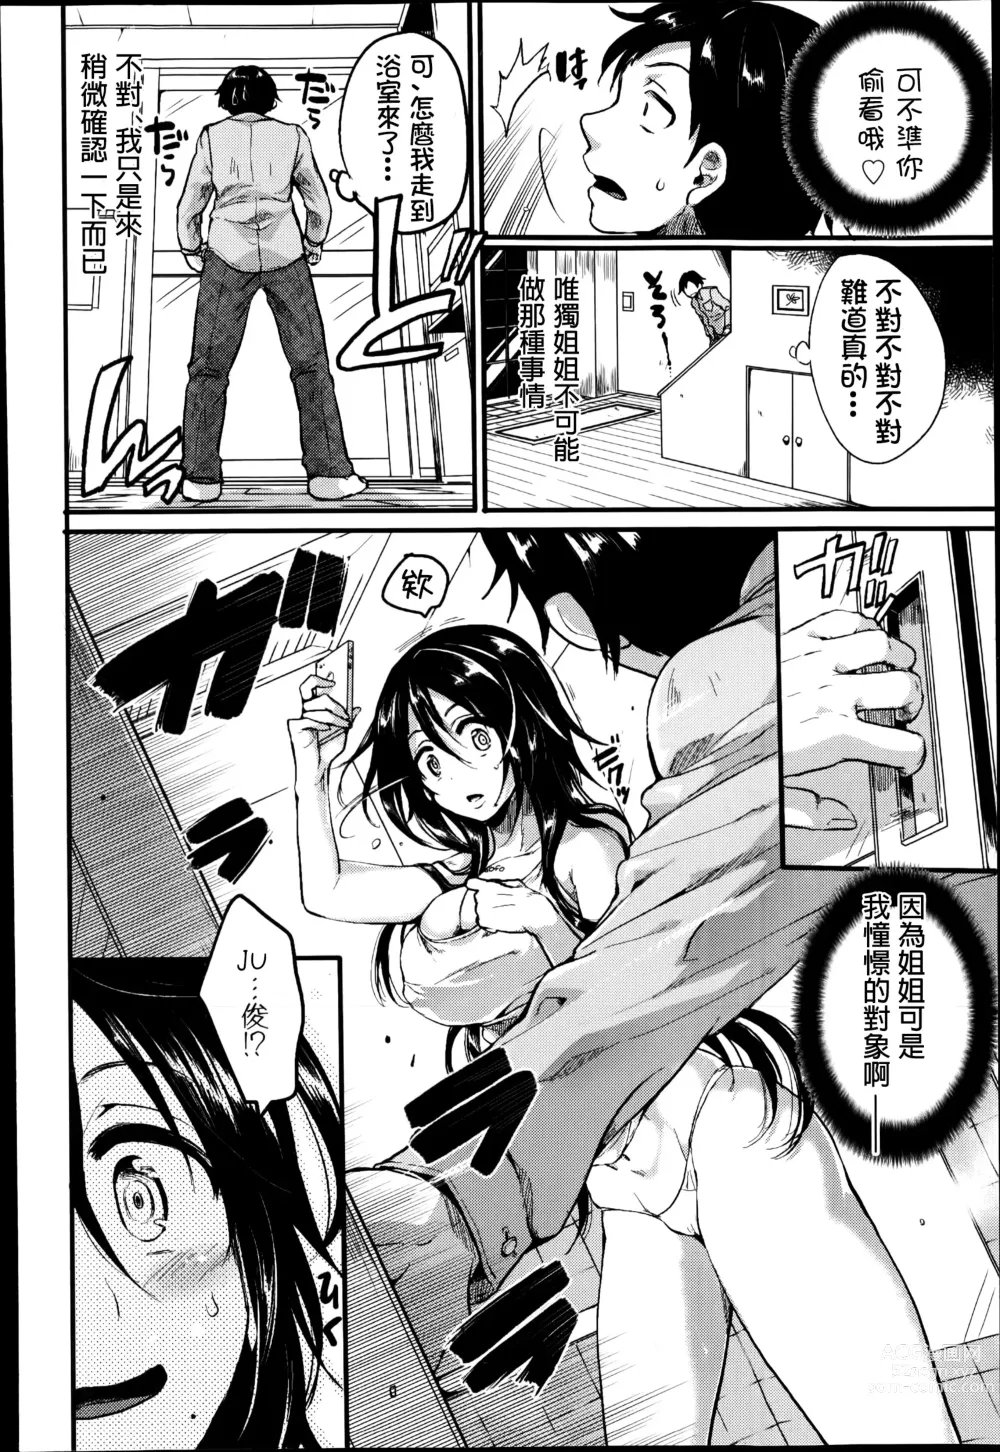 Page 5 of manga Akogare Nee-chan Megami-sama